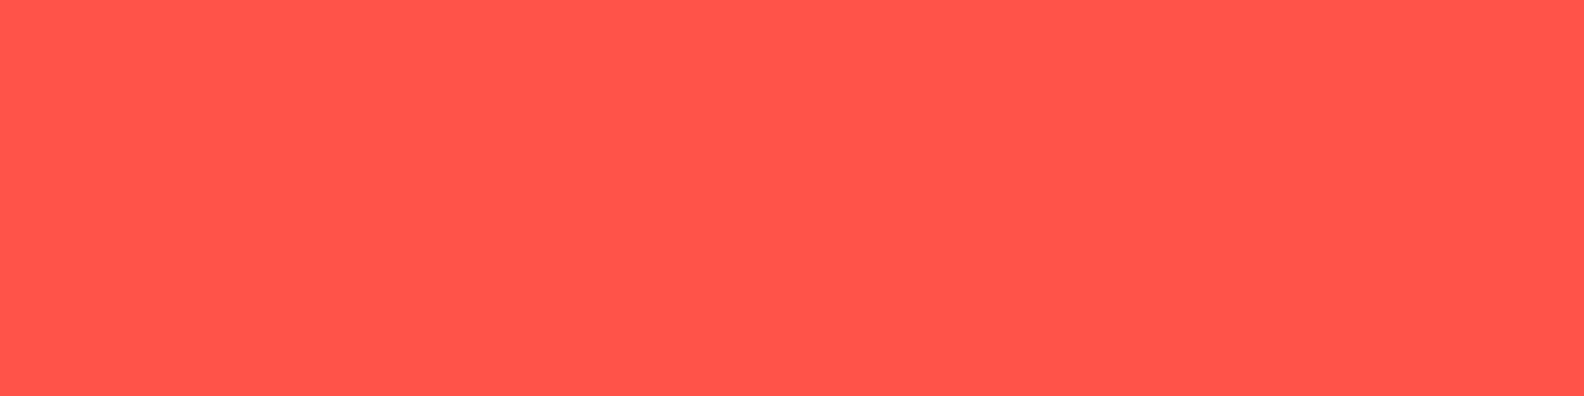 1584x396 Red-orange Solid Color Background